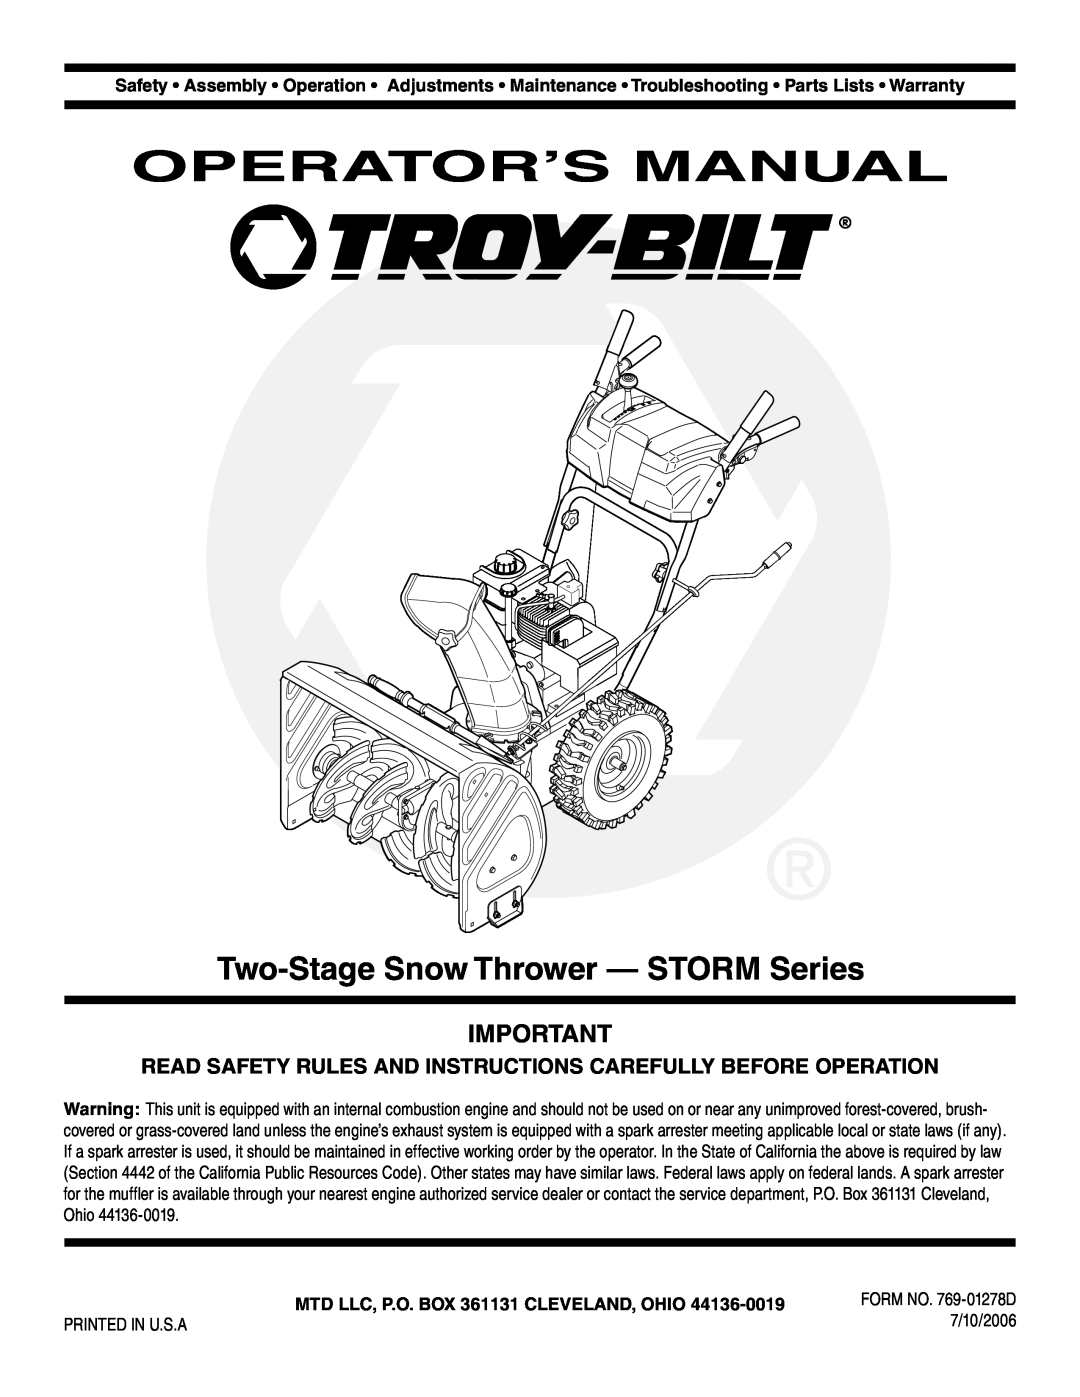 Troy-Bilt warranty Operator’S Manual, Two-Stage Snow Thrower - STORM Series, MTD LLC, P.O. BOX 361131 CLEVELAND, OHIO 